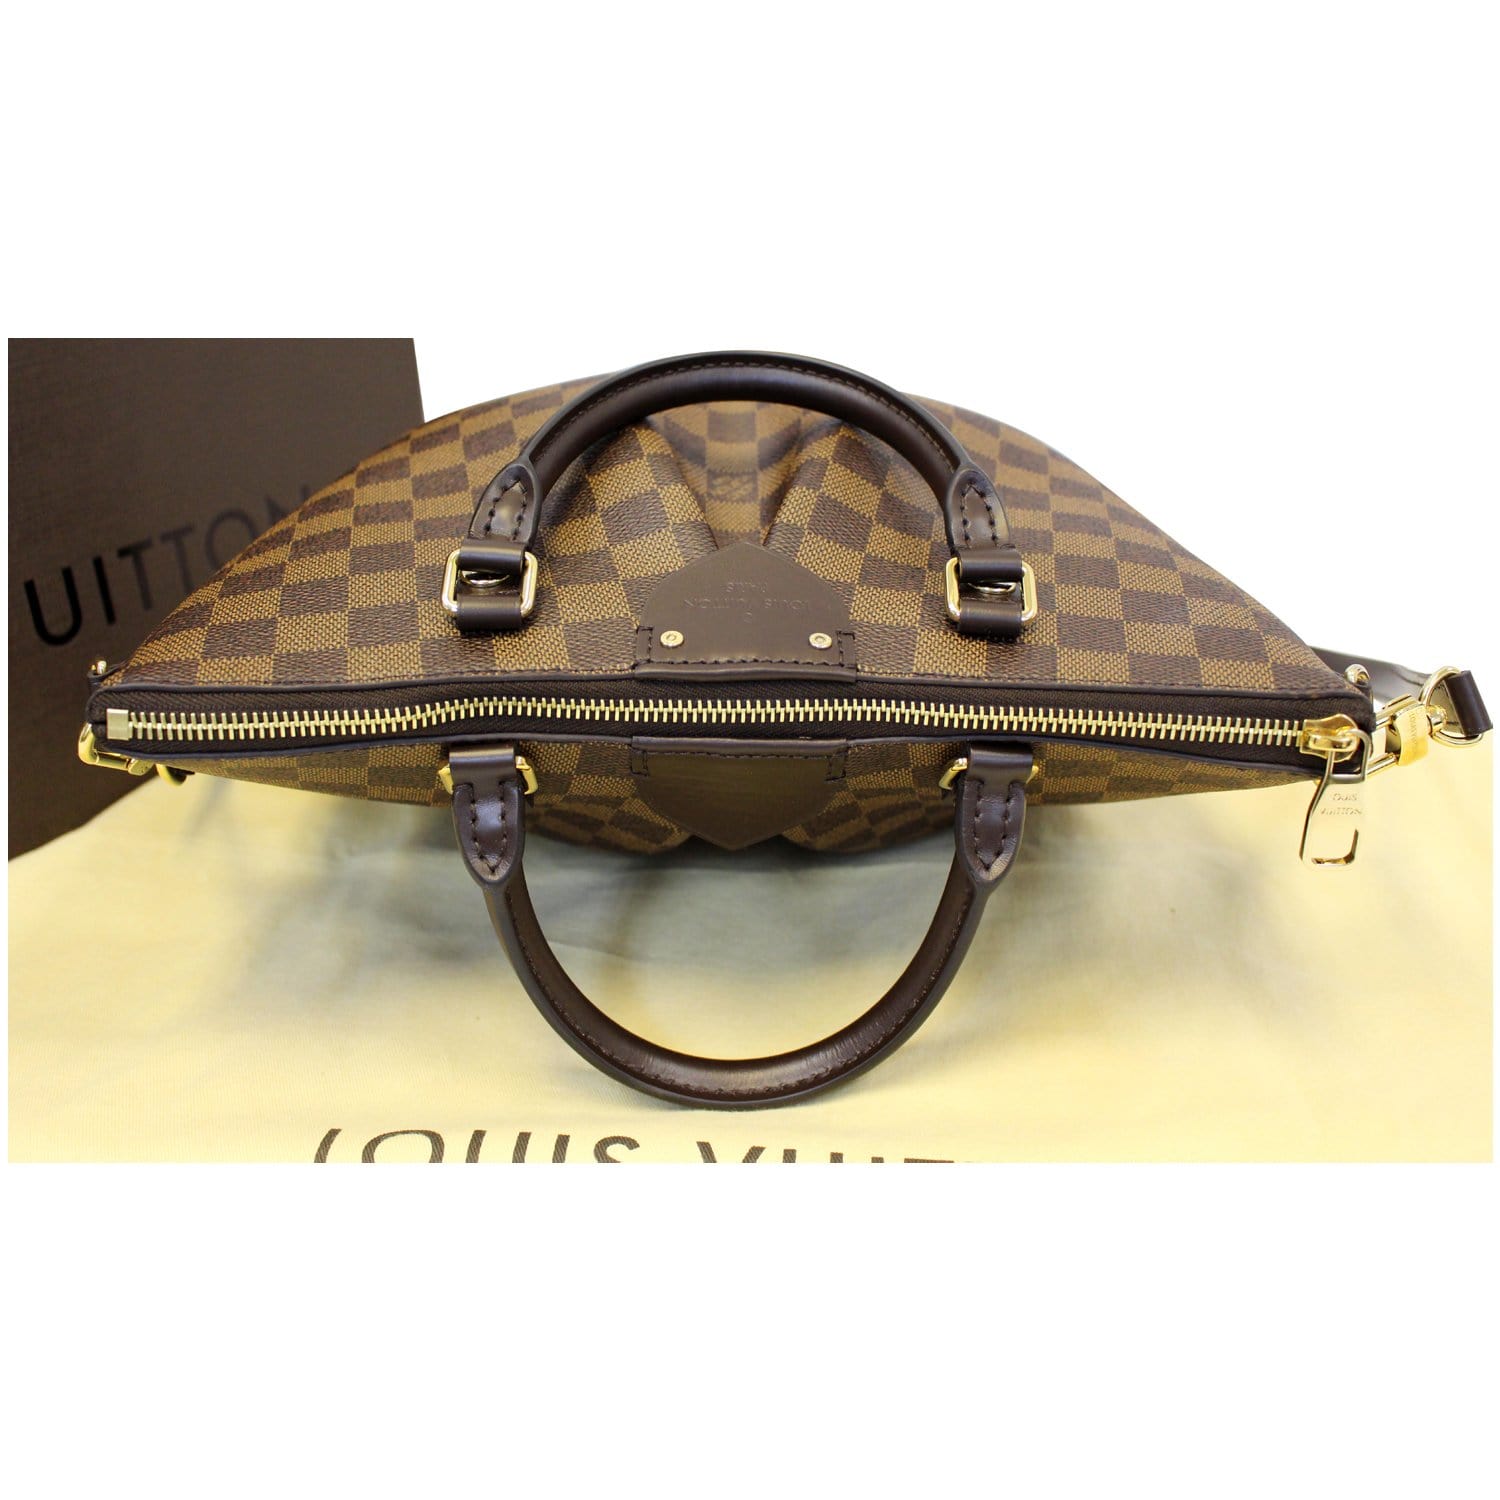 Siena cloth handbag Louis Vuitton Brown in Cloth - 33449182